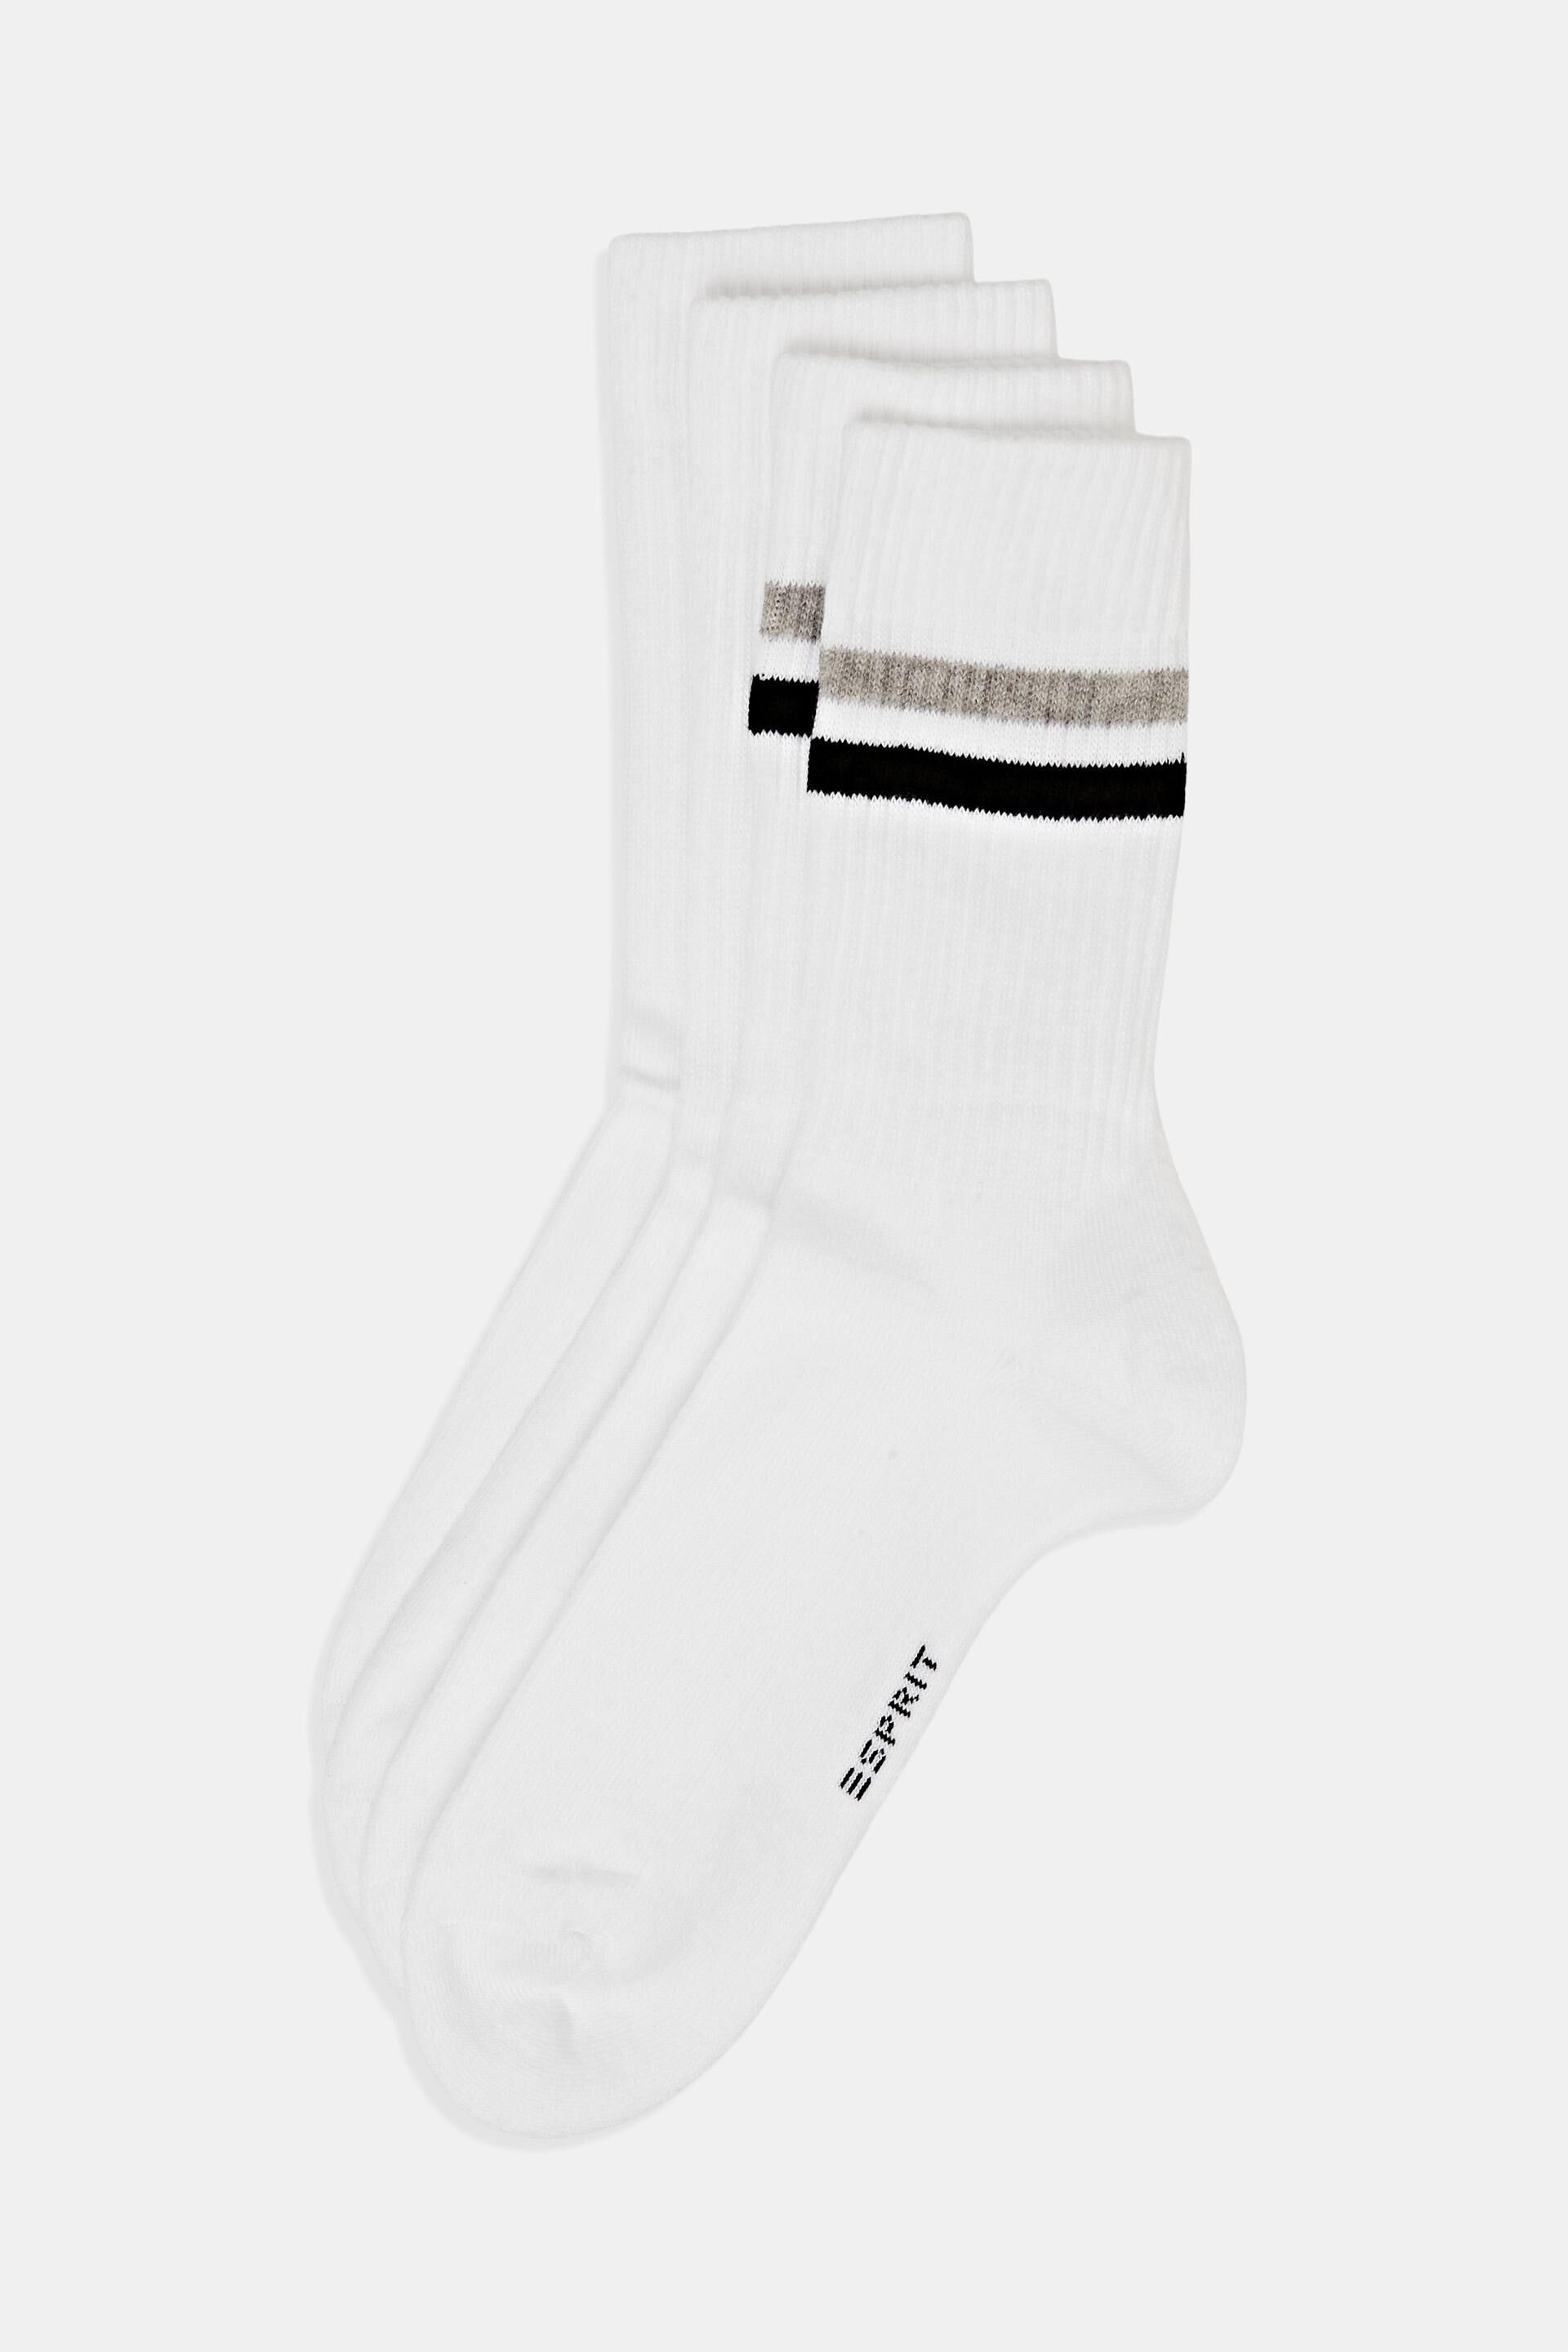 Esprit athletic organic of socks, 2-pack cotton